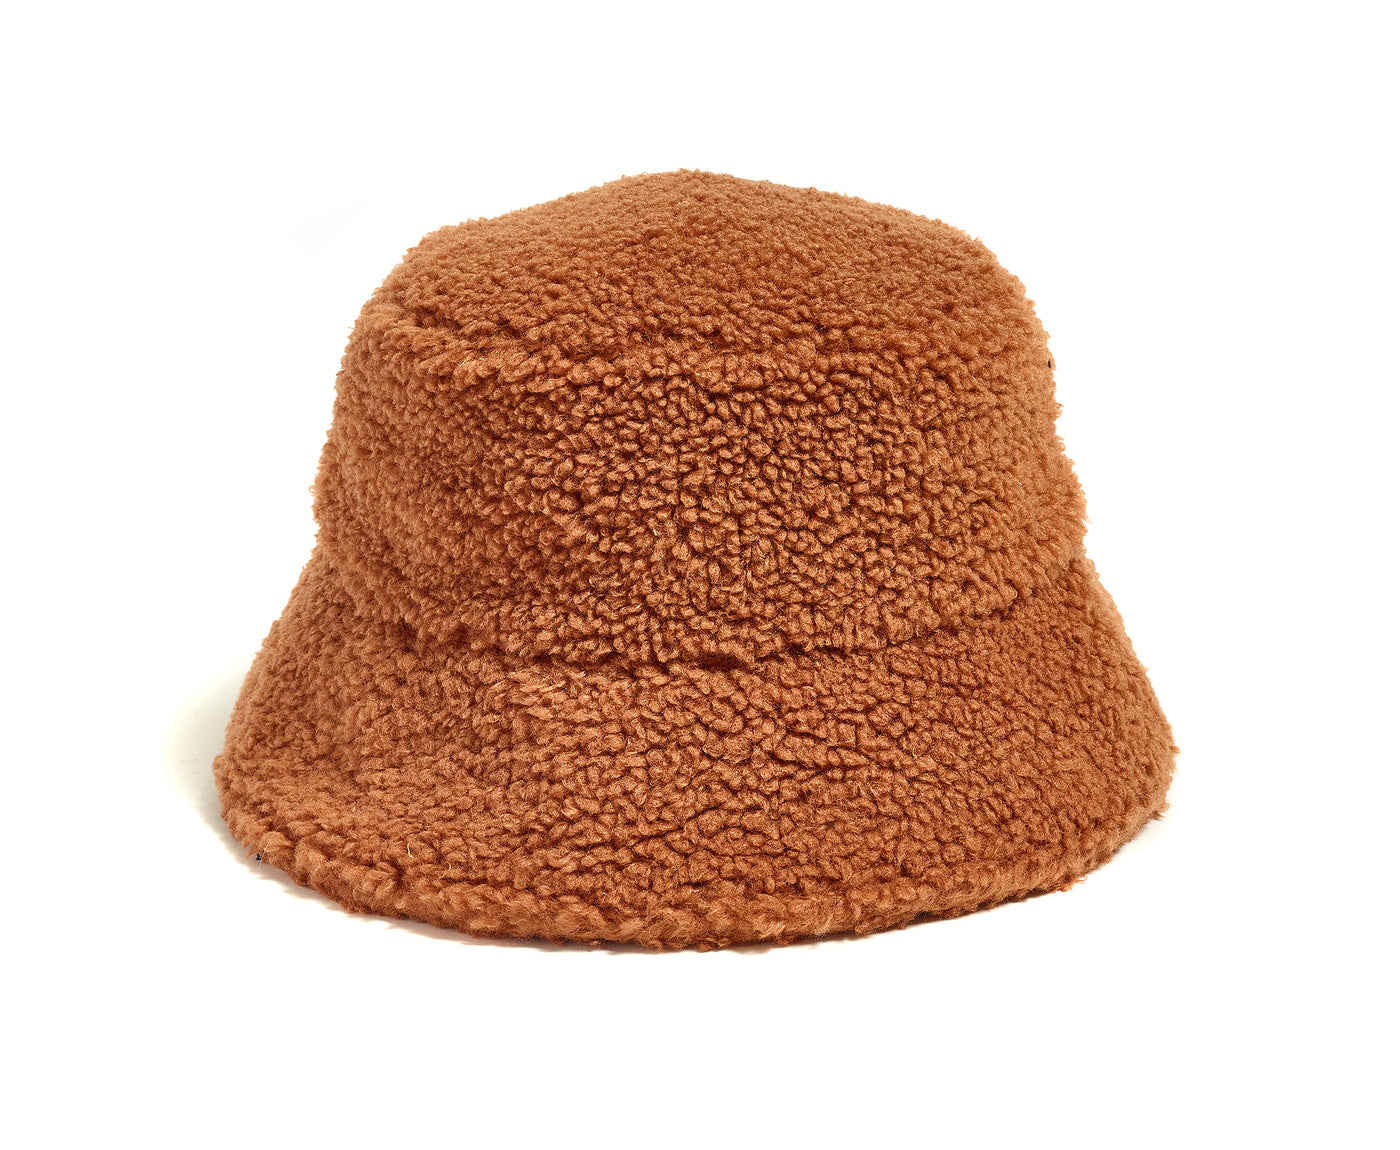 Mount Rundle Bucket Hat